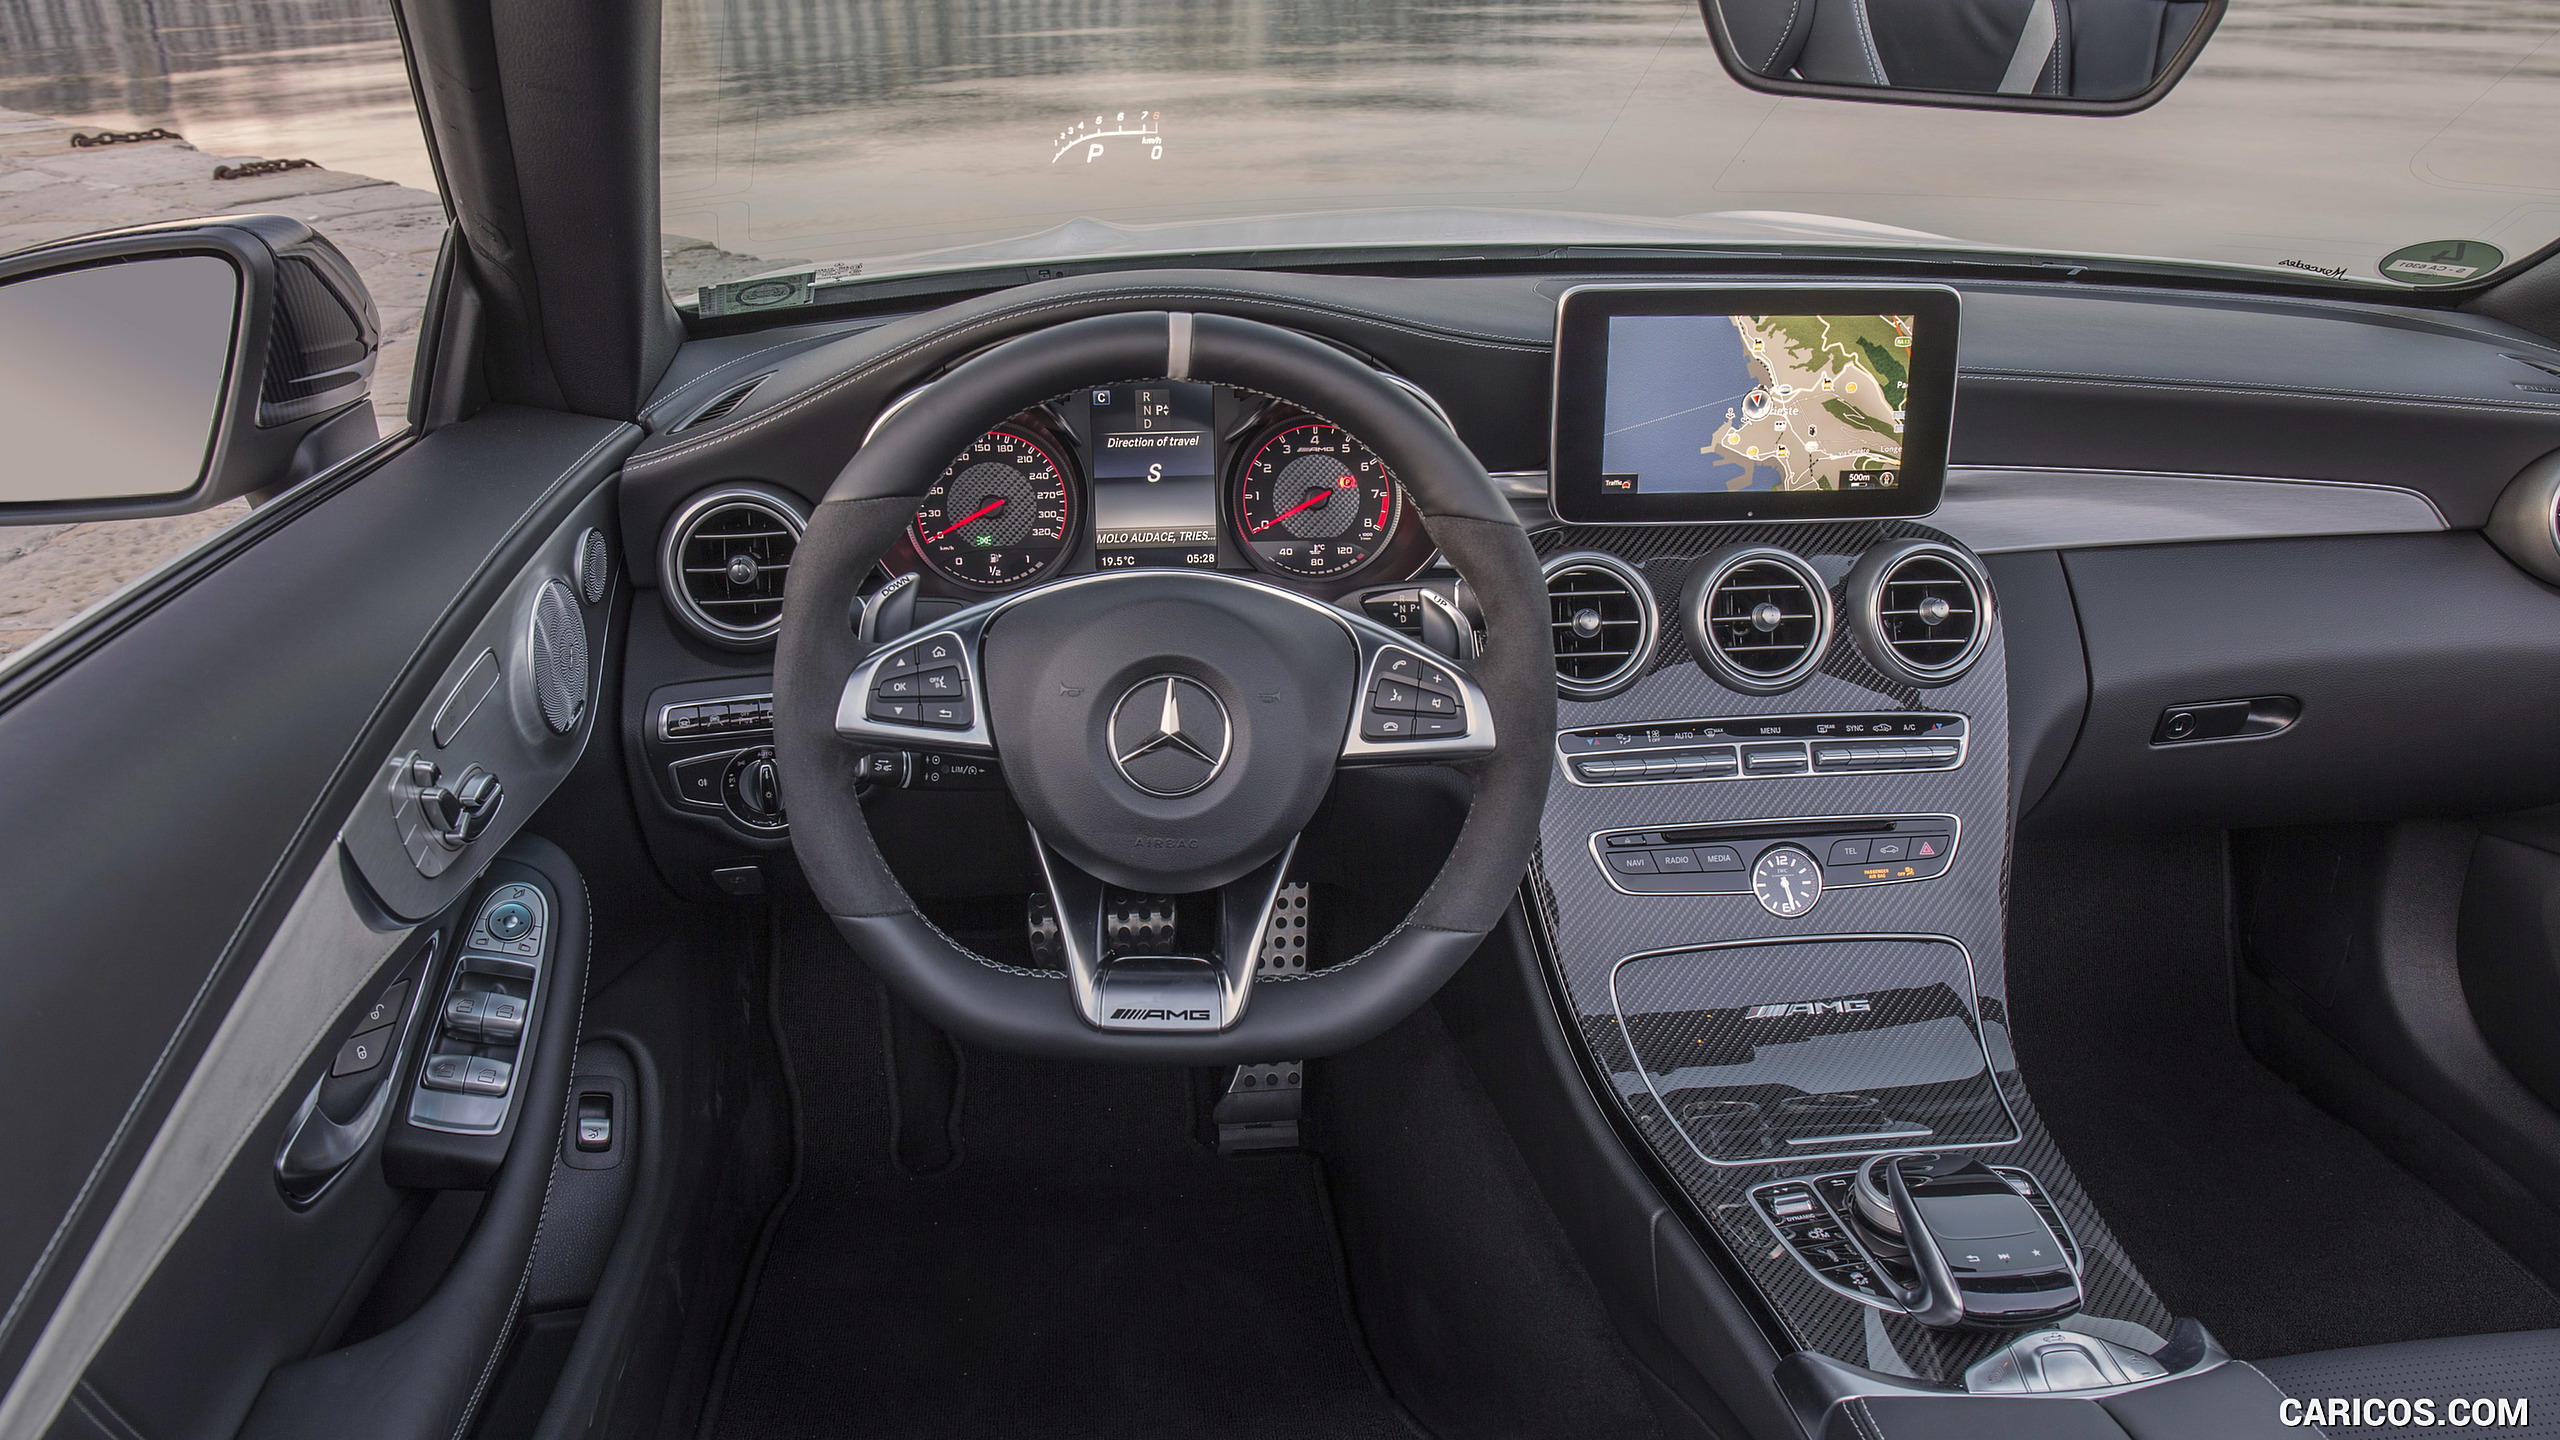 2017 Mercedes-AMG C63 S Cabriolet - Interior, Cockpit, #145 of 222